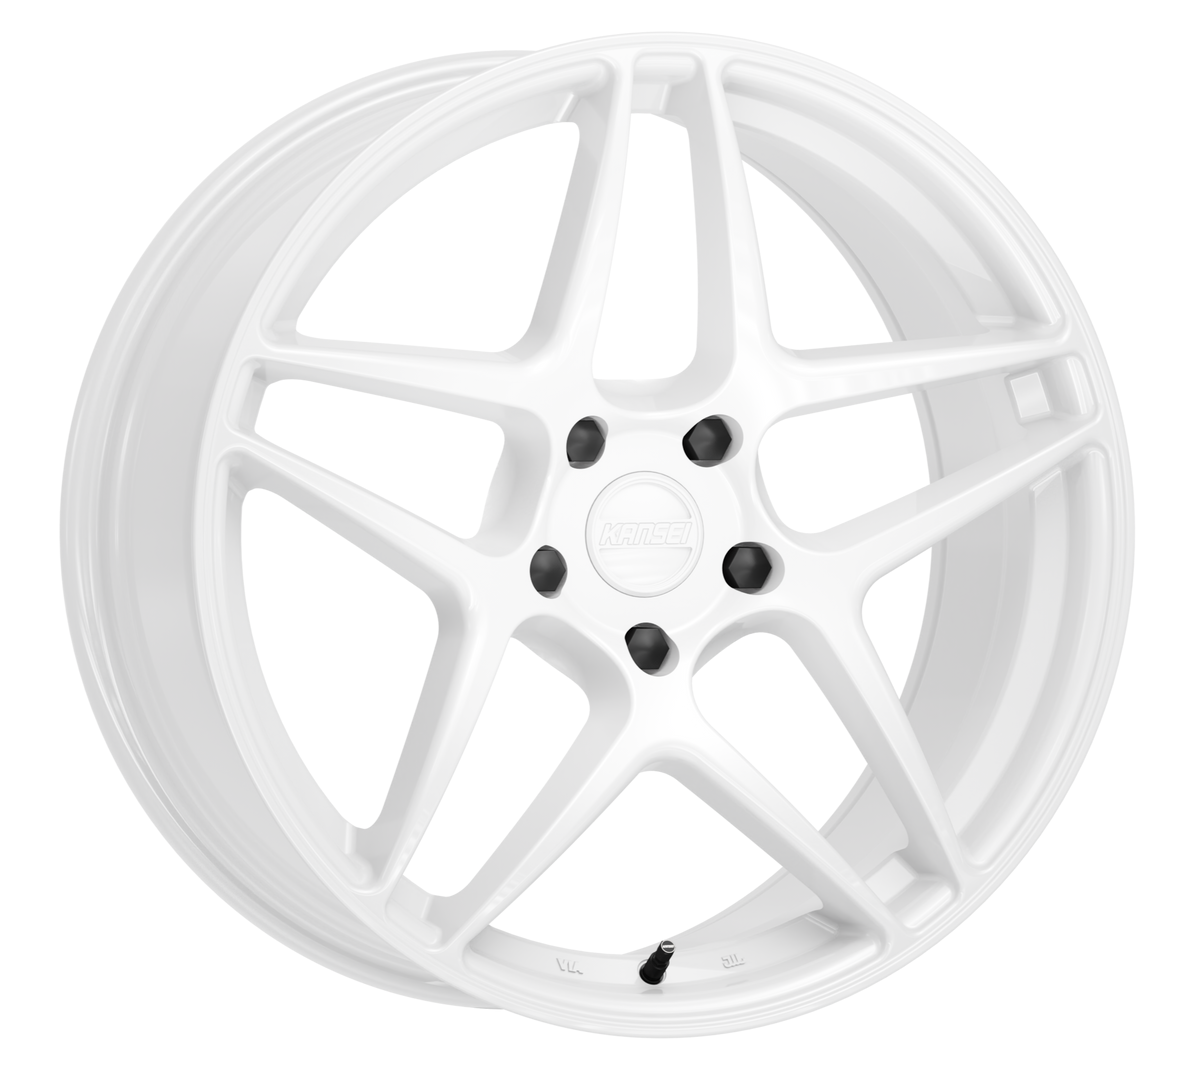 K15W ASTRO Wheel, Size: 18" x 9", Bolt Pattern: 5 x 100 mm, Backspace: 5.87" [Finish: Gloss White]